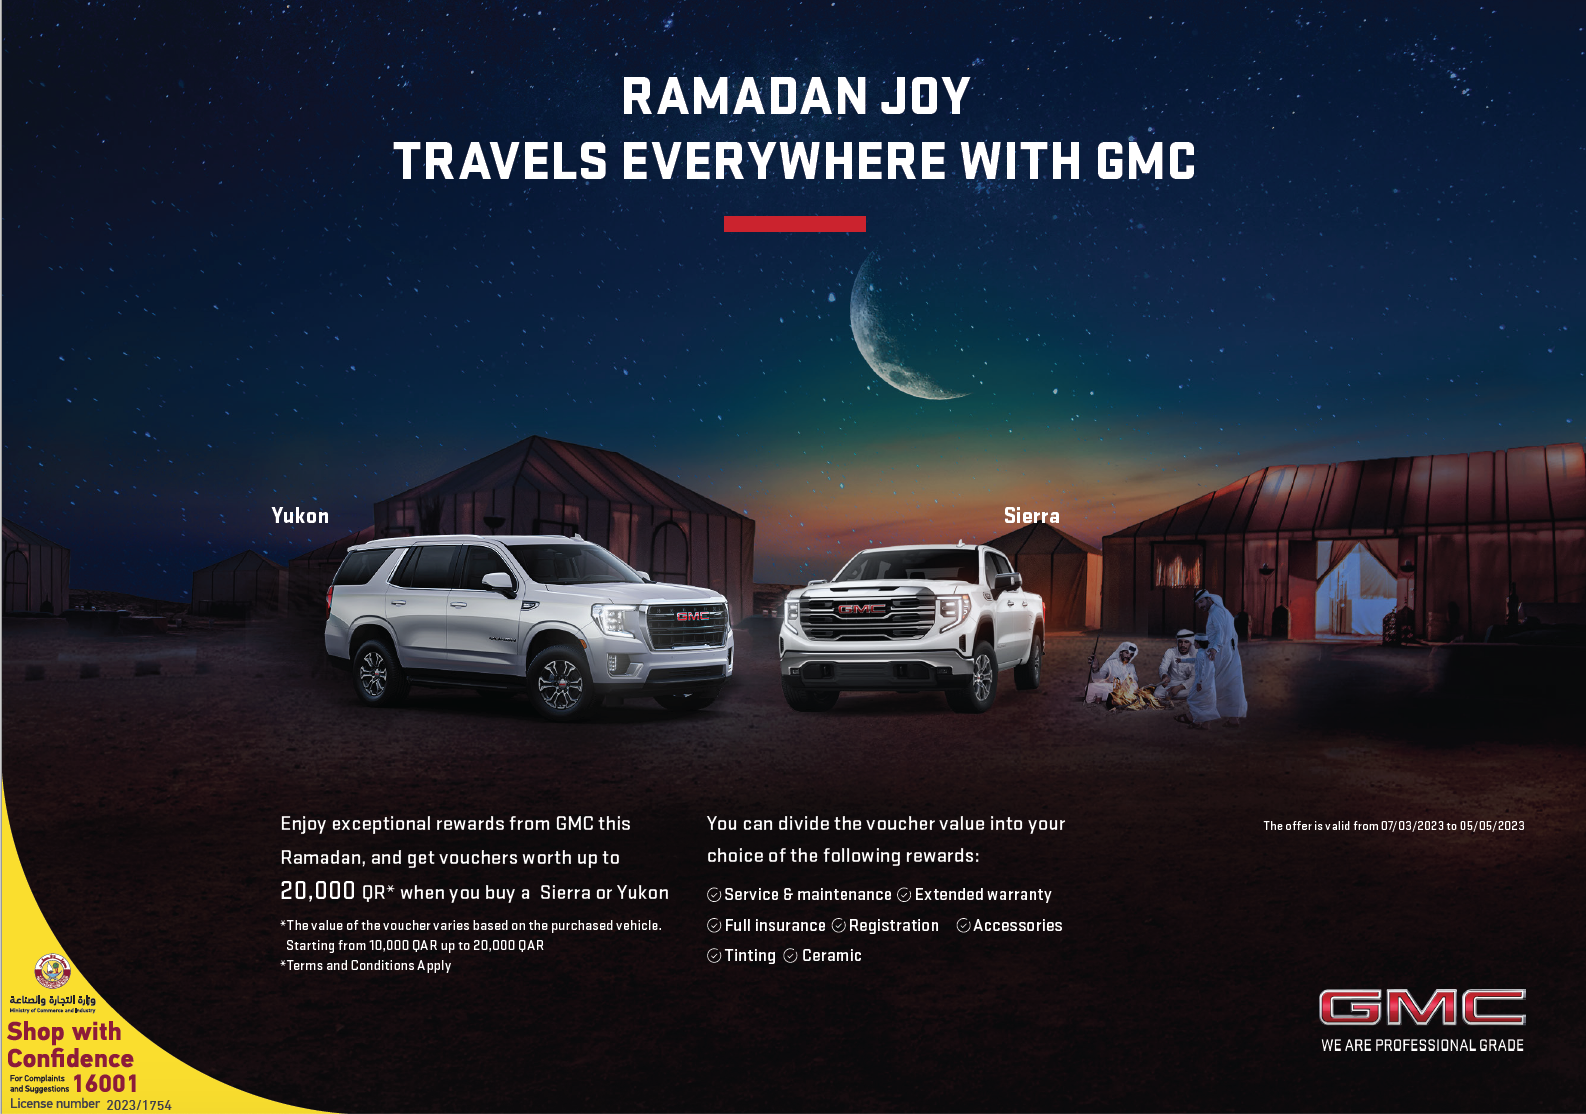 GMC’s exclusive dealer in Qatar is spreading the joy this Ramadan